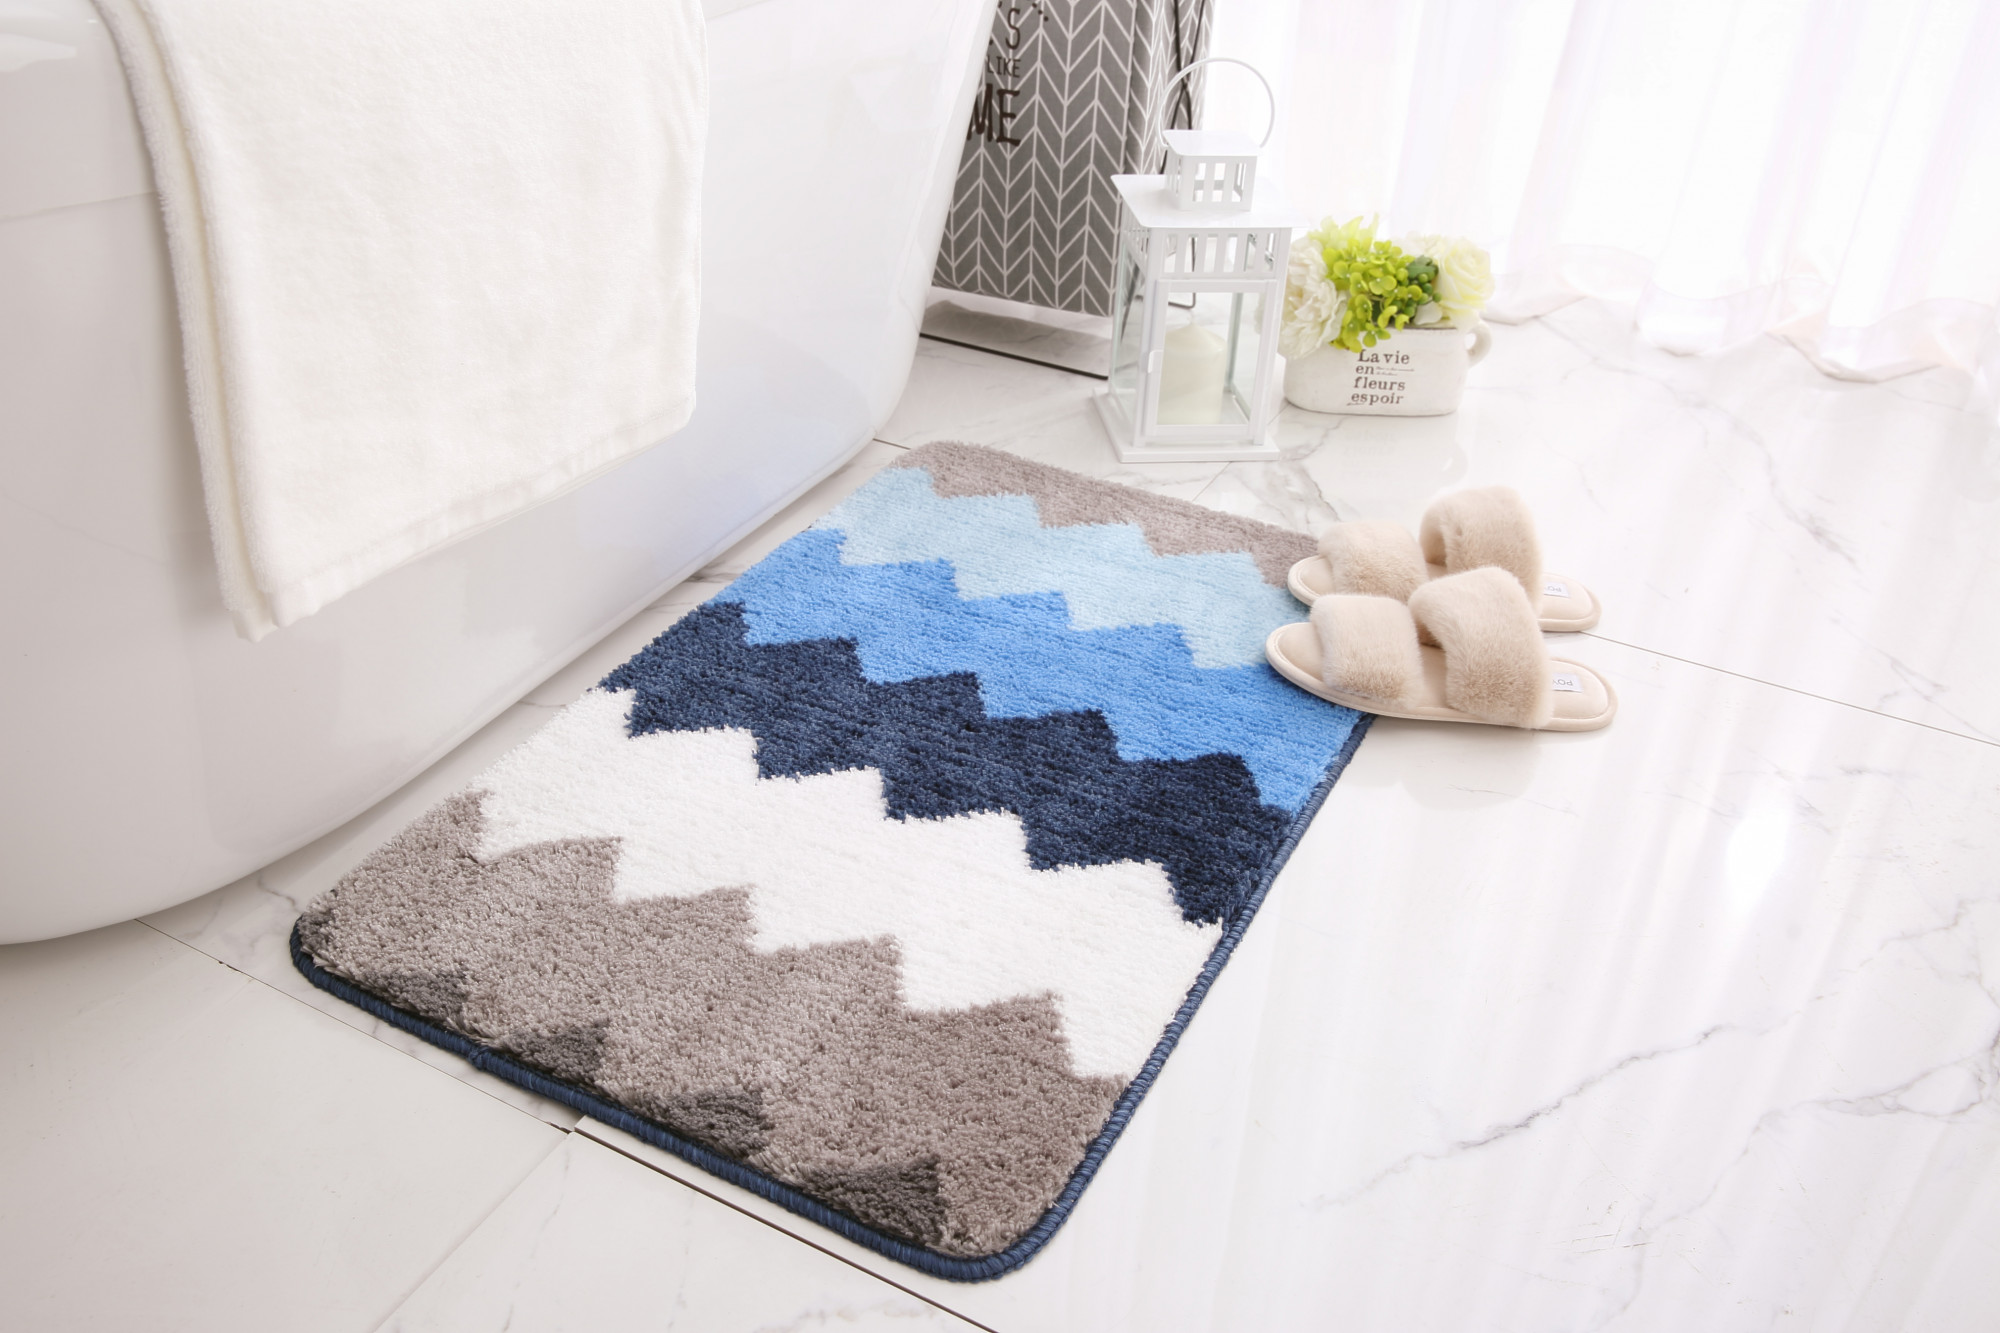 Kuber Industries Soft Bathroom Mat|Anti-Slip Mat For Bathroom Floor|Wave Design With TPR Backing|Foot Mats For Home, Living Room, Bedroom (Multi Color)